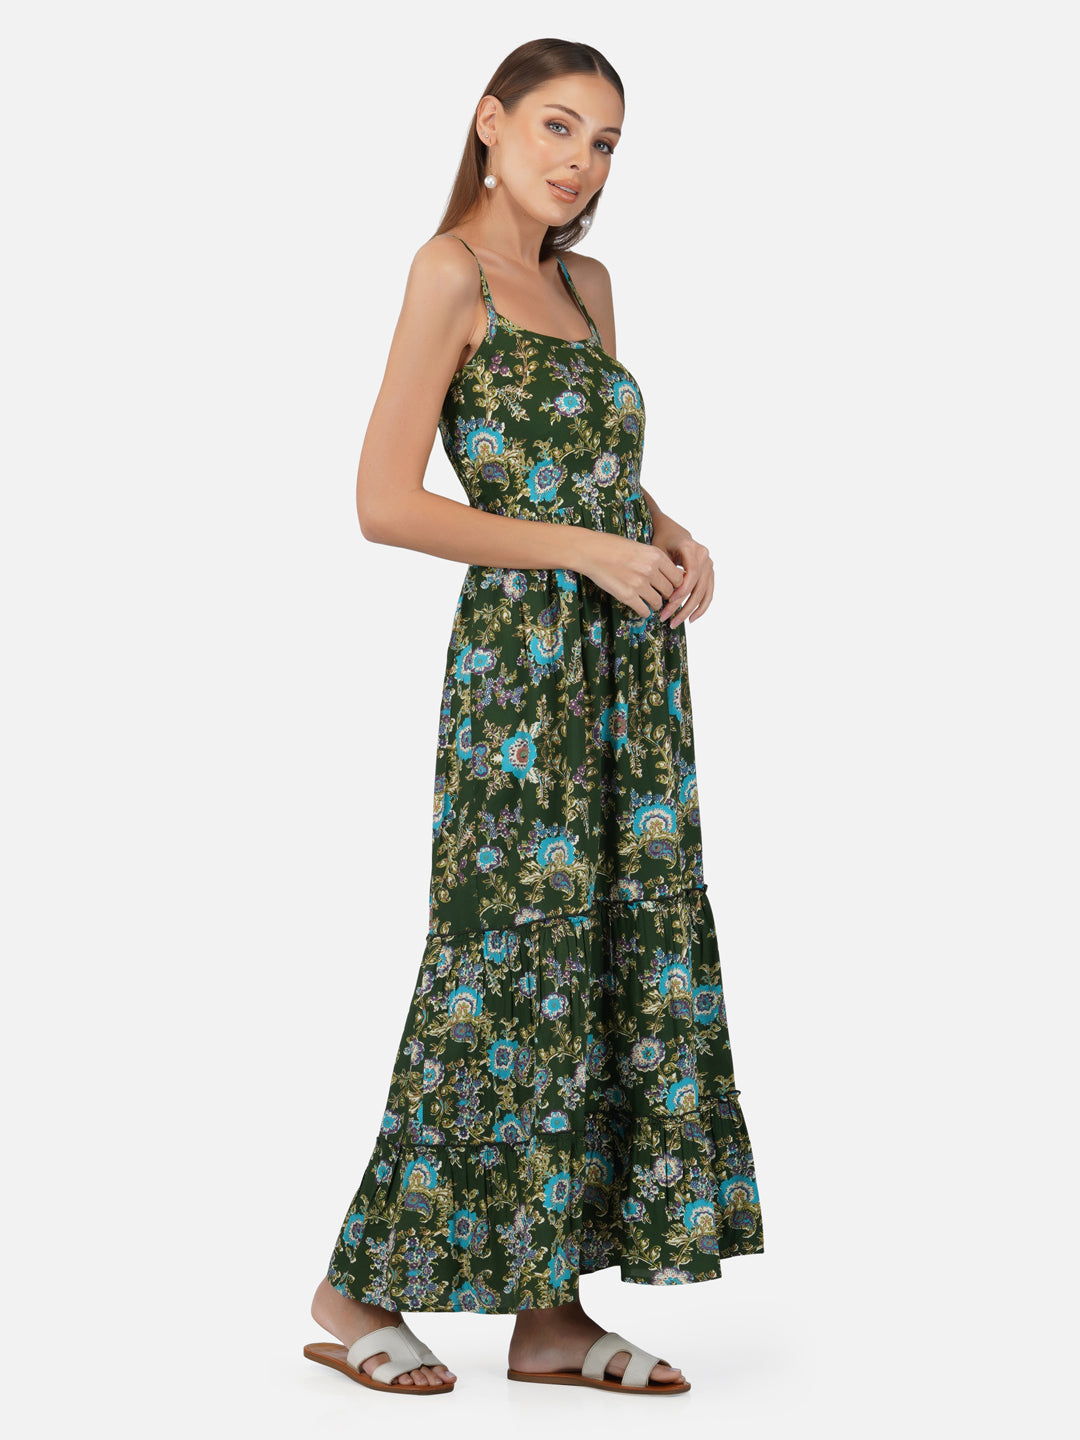 Porsorte Womens Rayon Tropical Green Printed Long Strappy Casual Dress